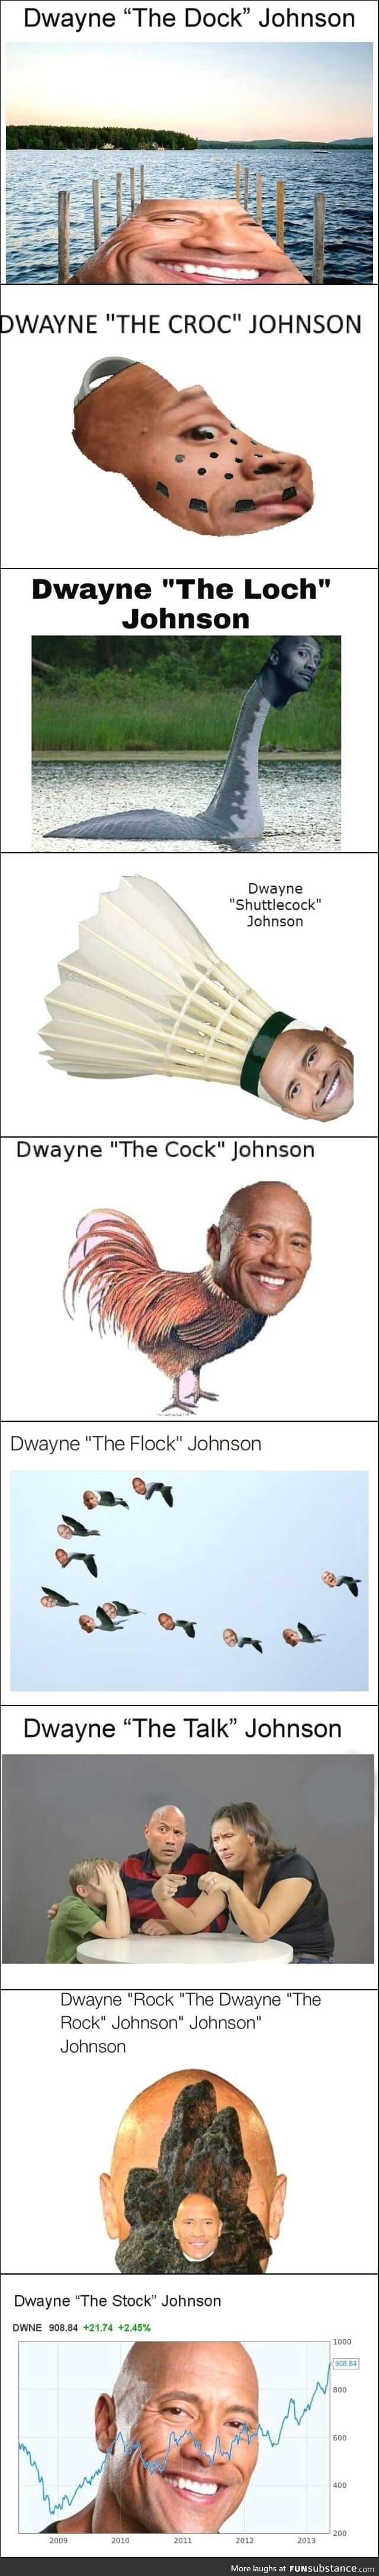 Dwayne the Johnson